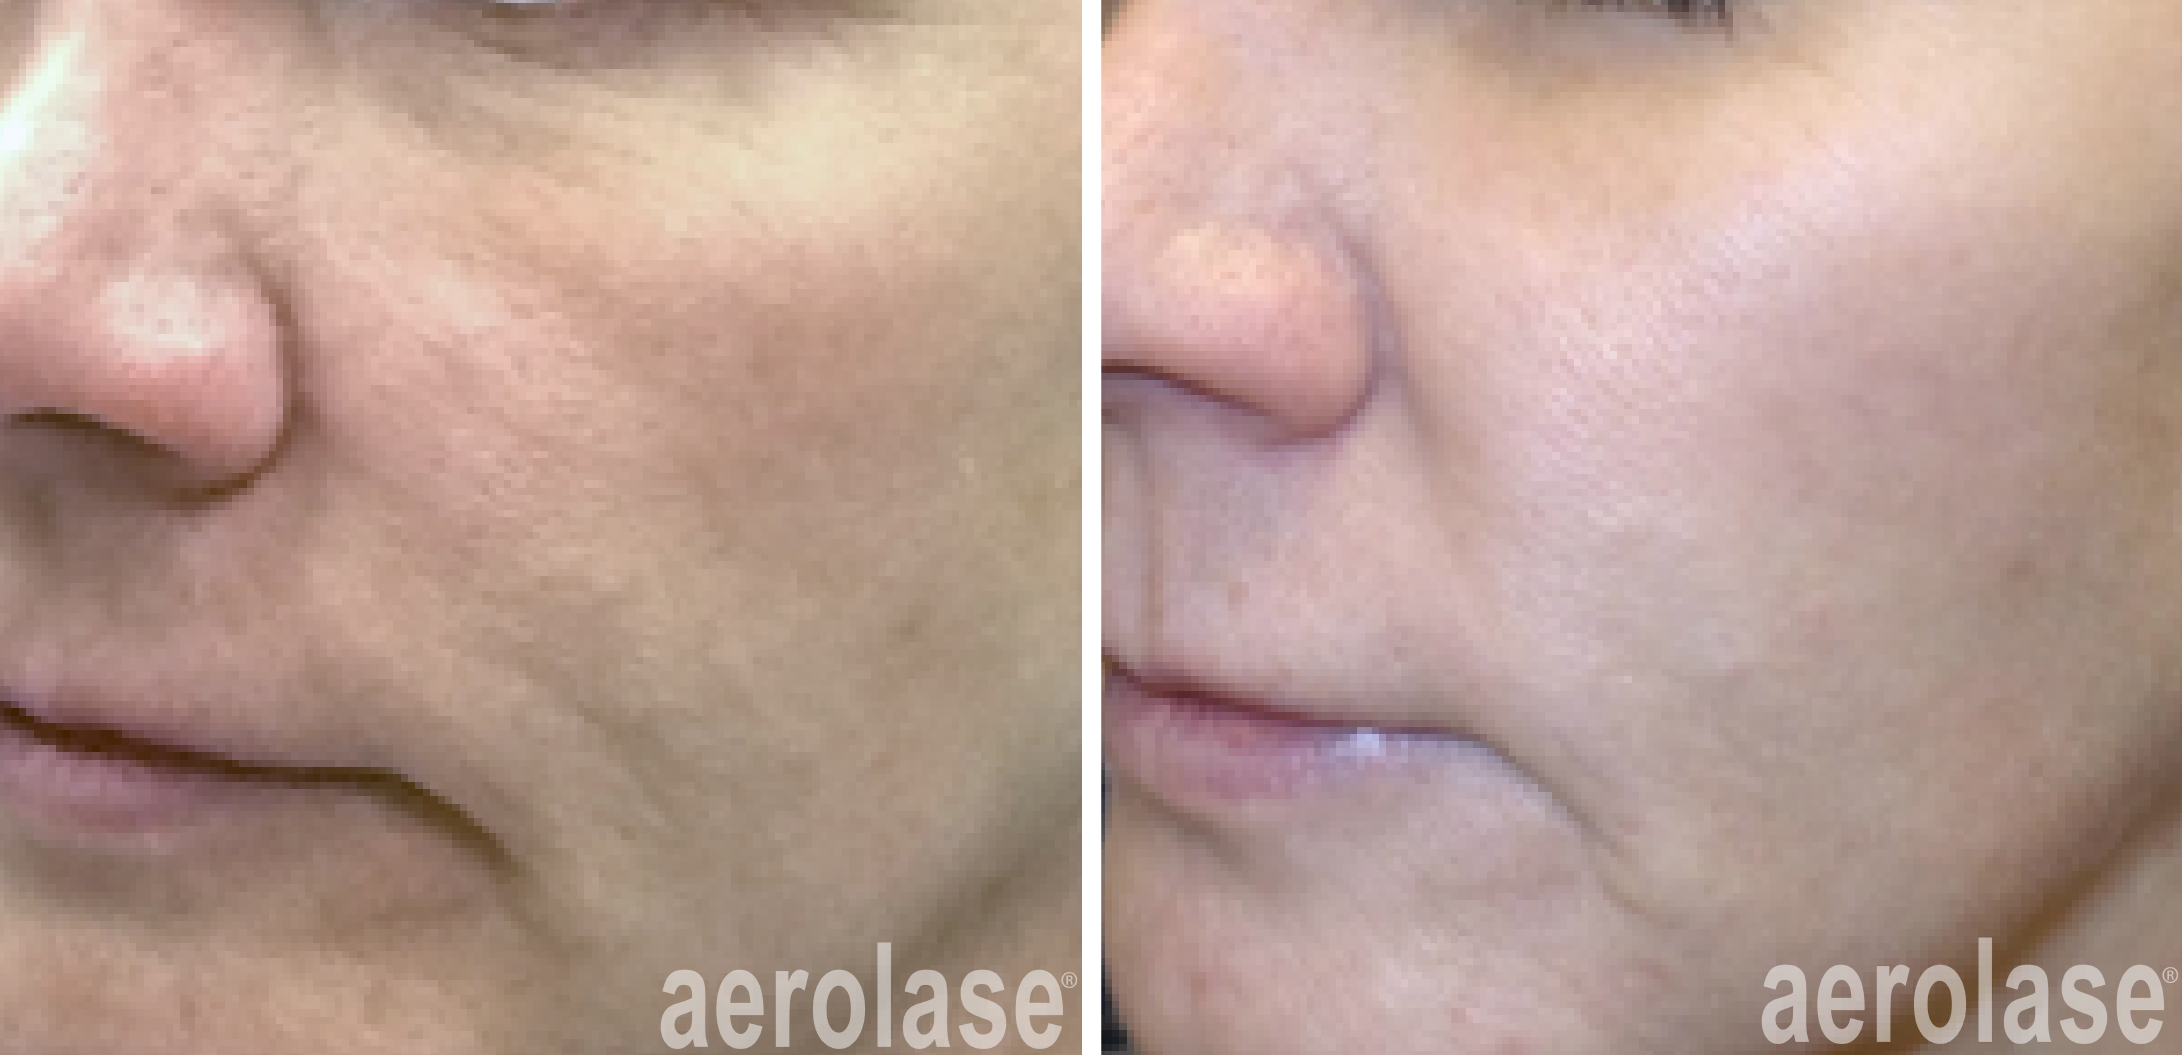 aerolase-skin-rejuvenation-before-after-kevin-pinski-4-treatments.png